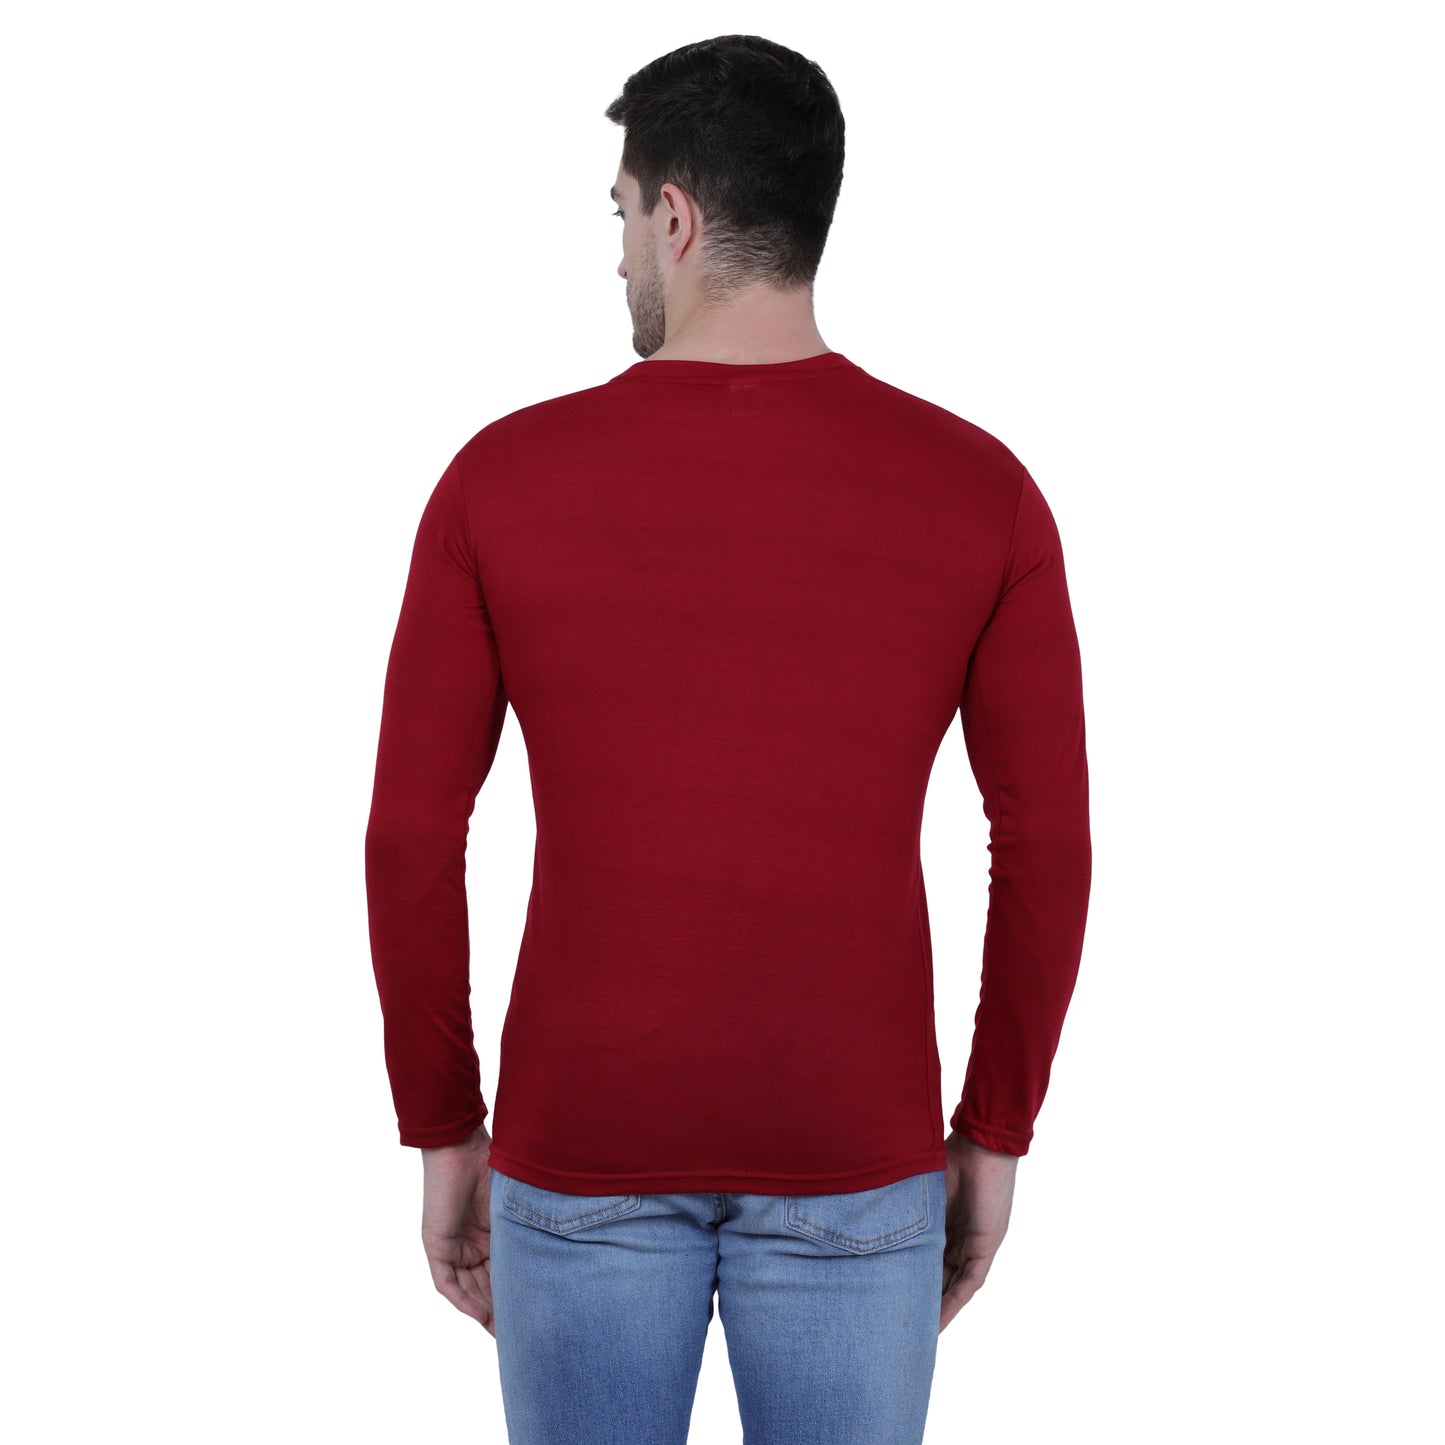 Men's Cotton Round Neck Full Sleeves Stylish Tshirt (Pack of 3)